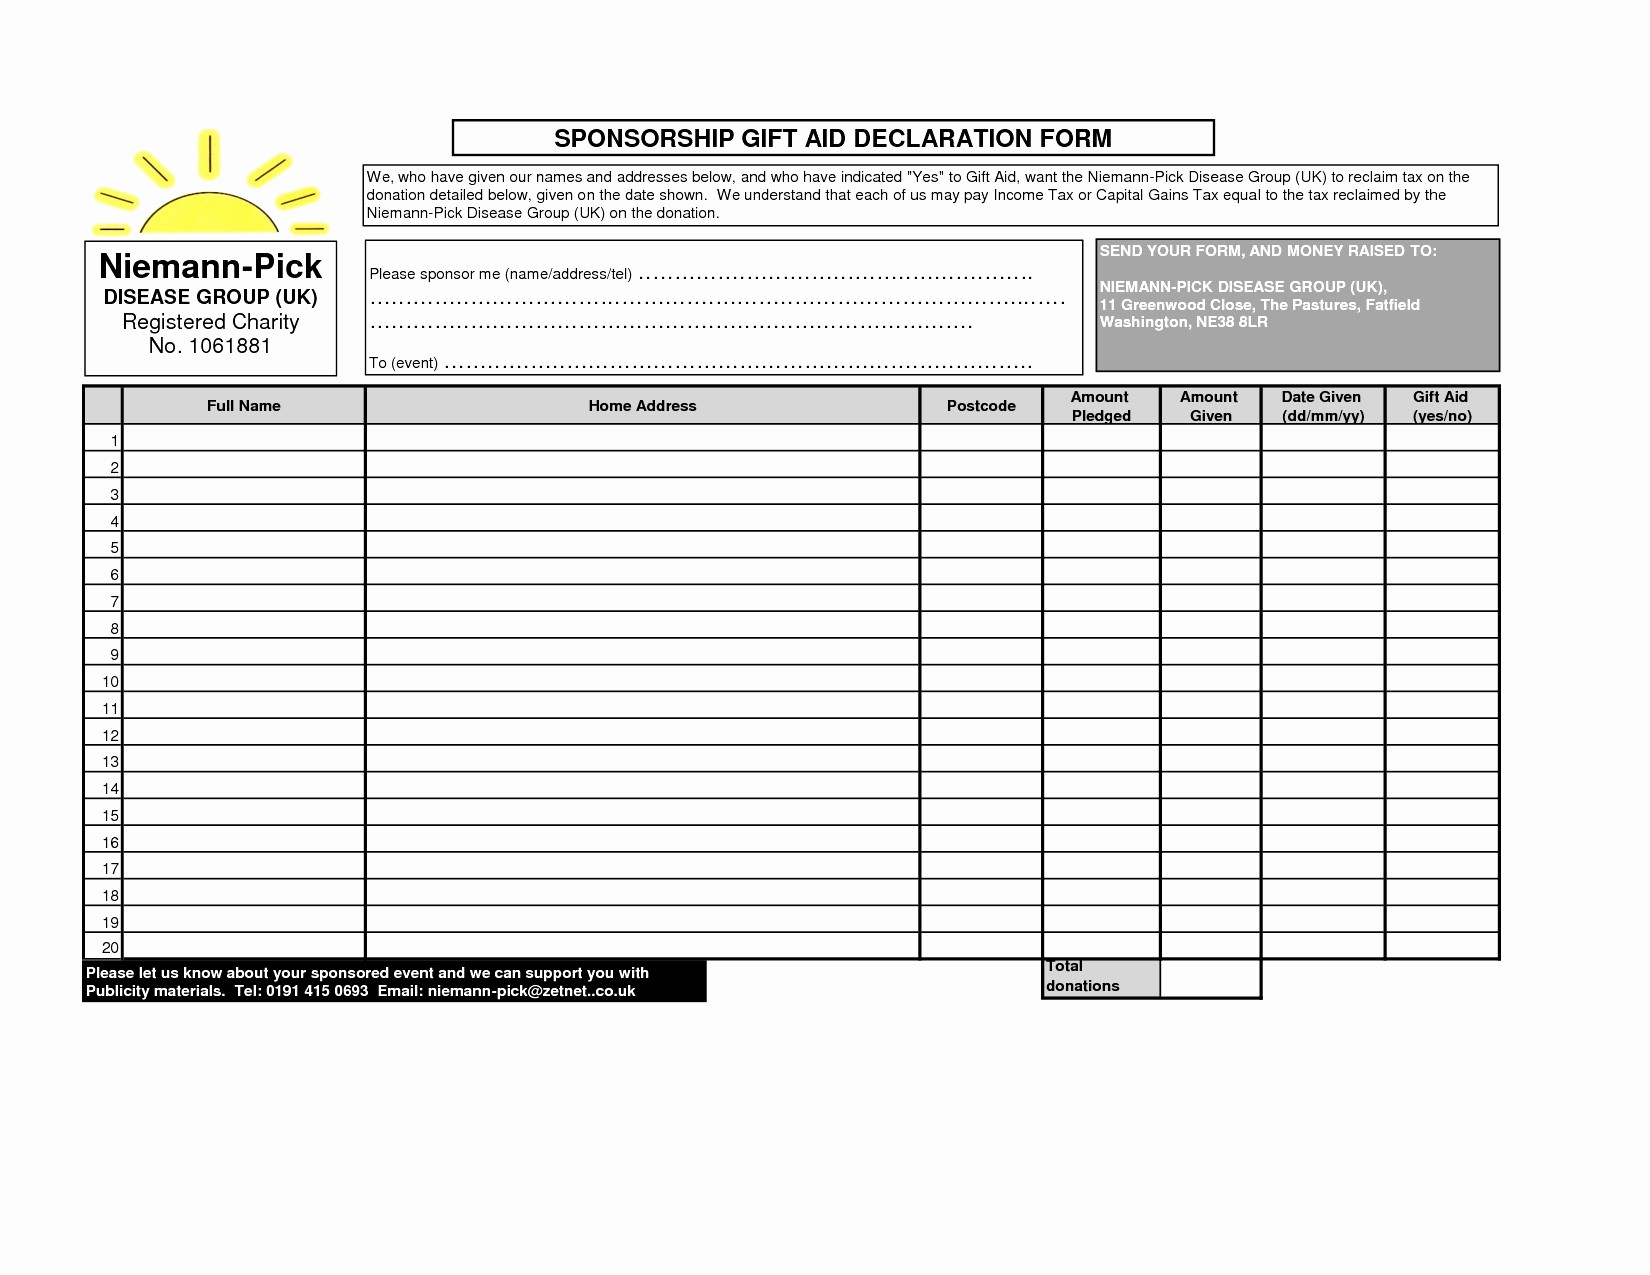 Lularoe Spreadsheet Free Inspirational Spreadsheets For